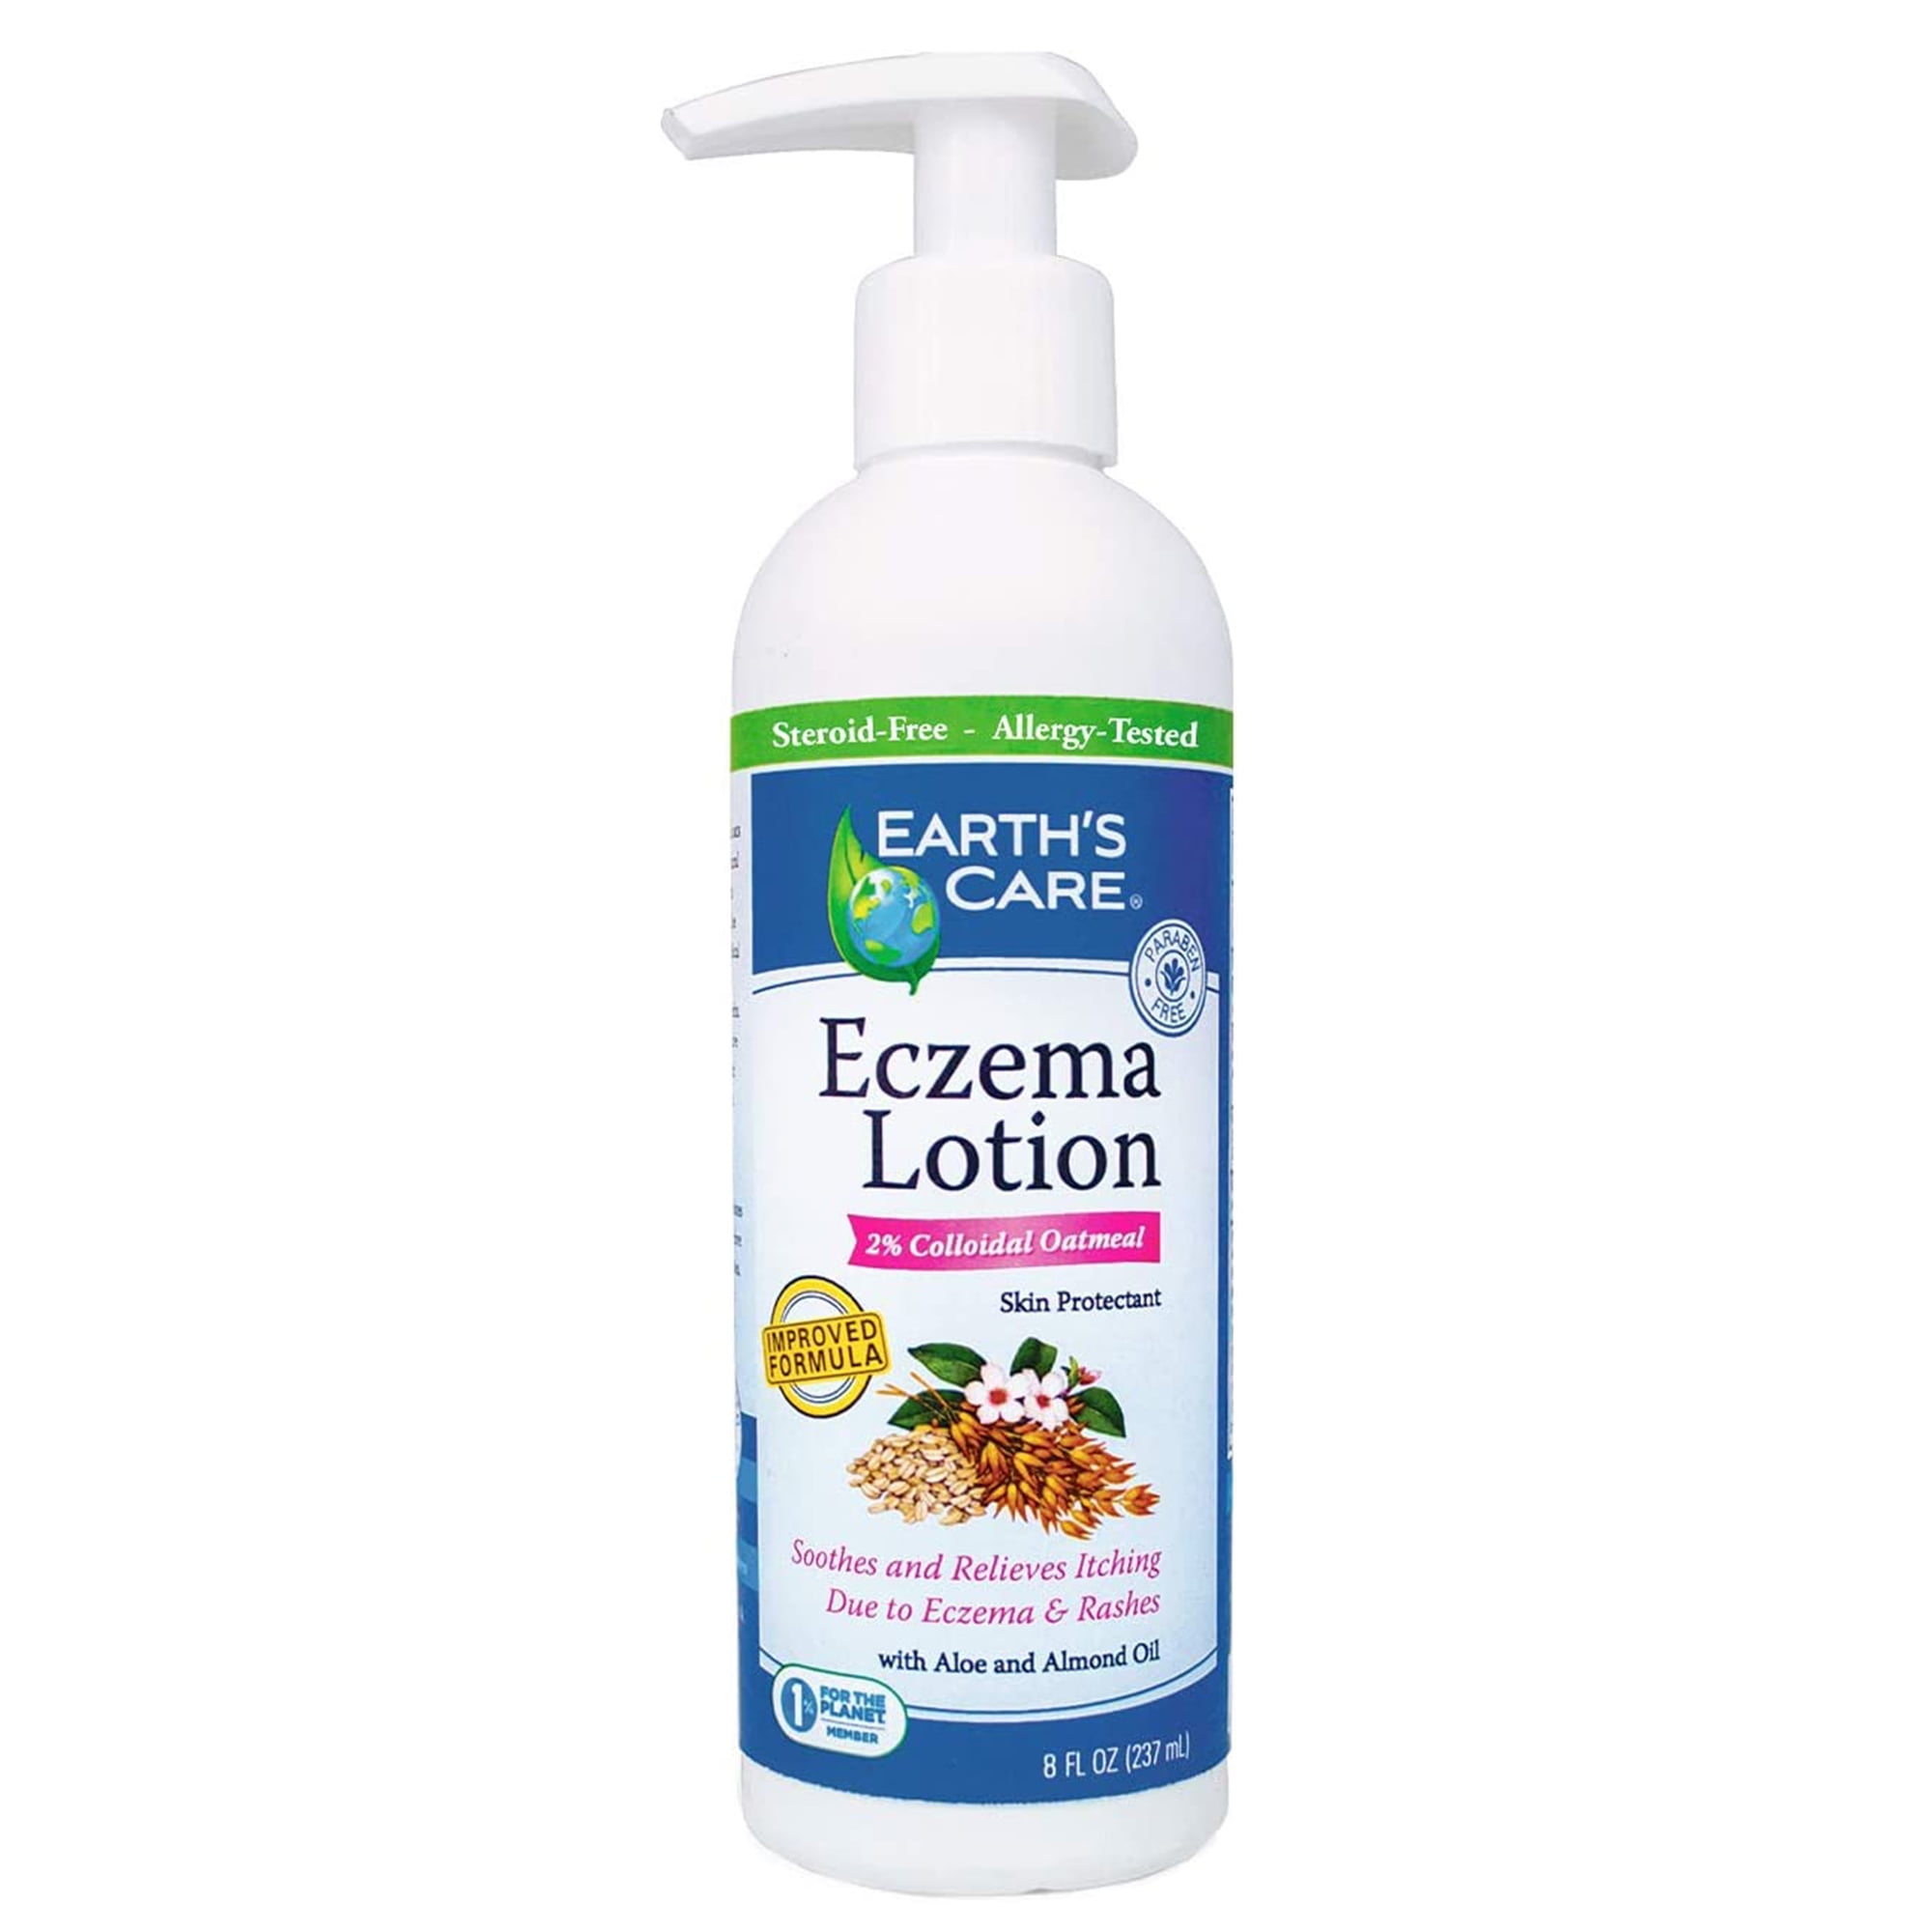 Eczema Relief with Colloidal Oatmeal – Avalon Organics